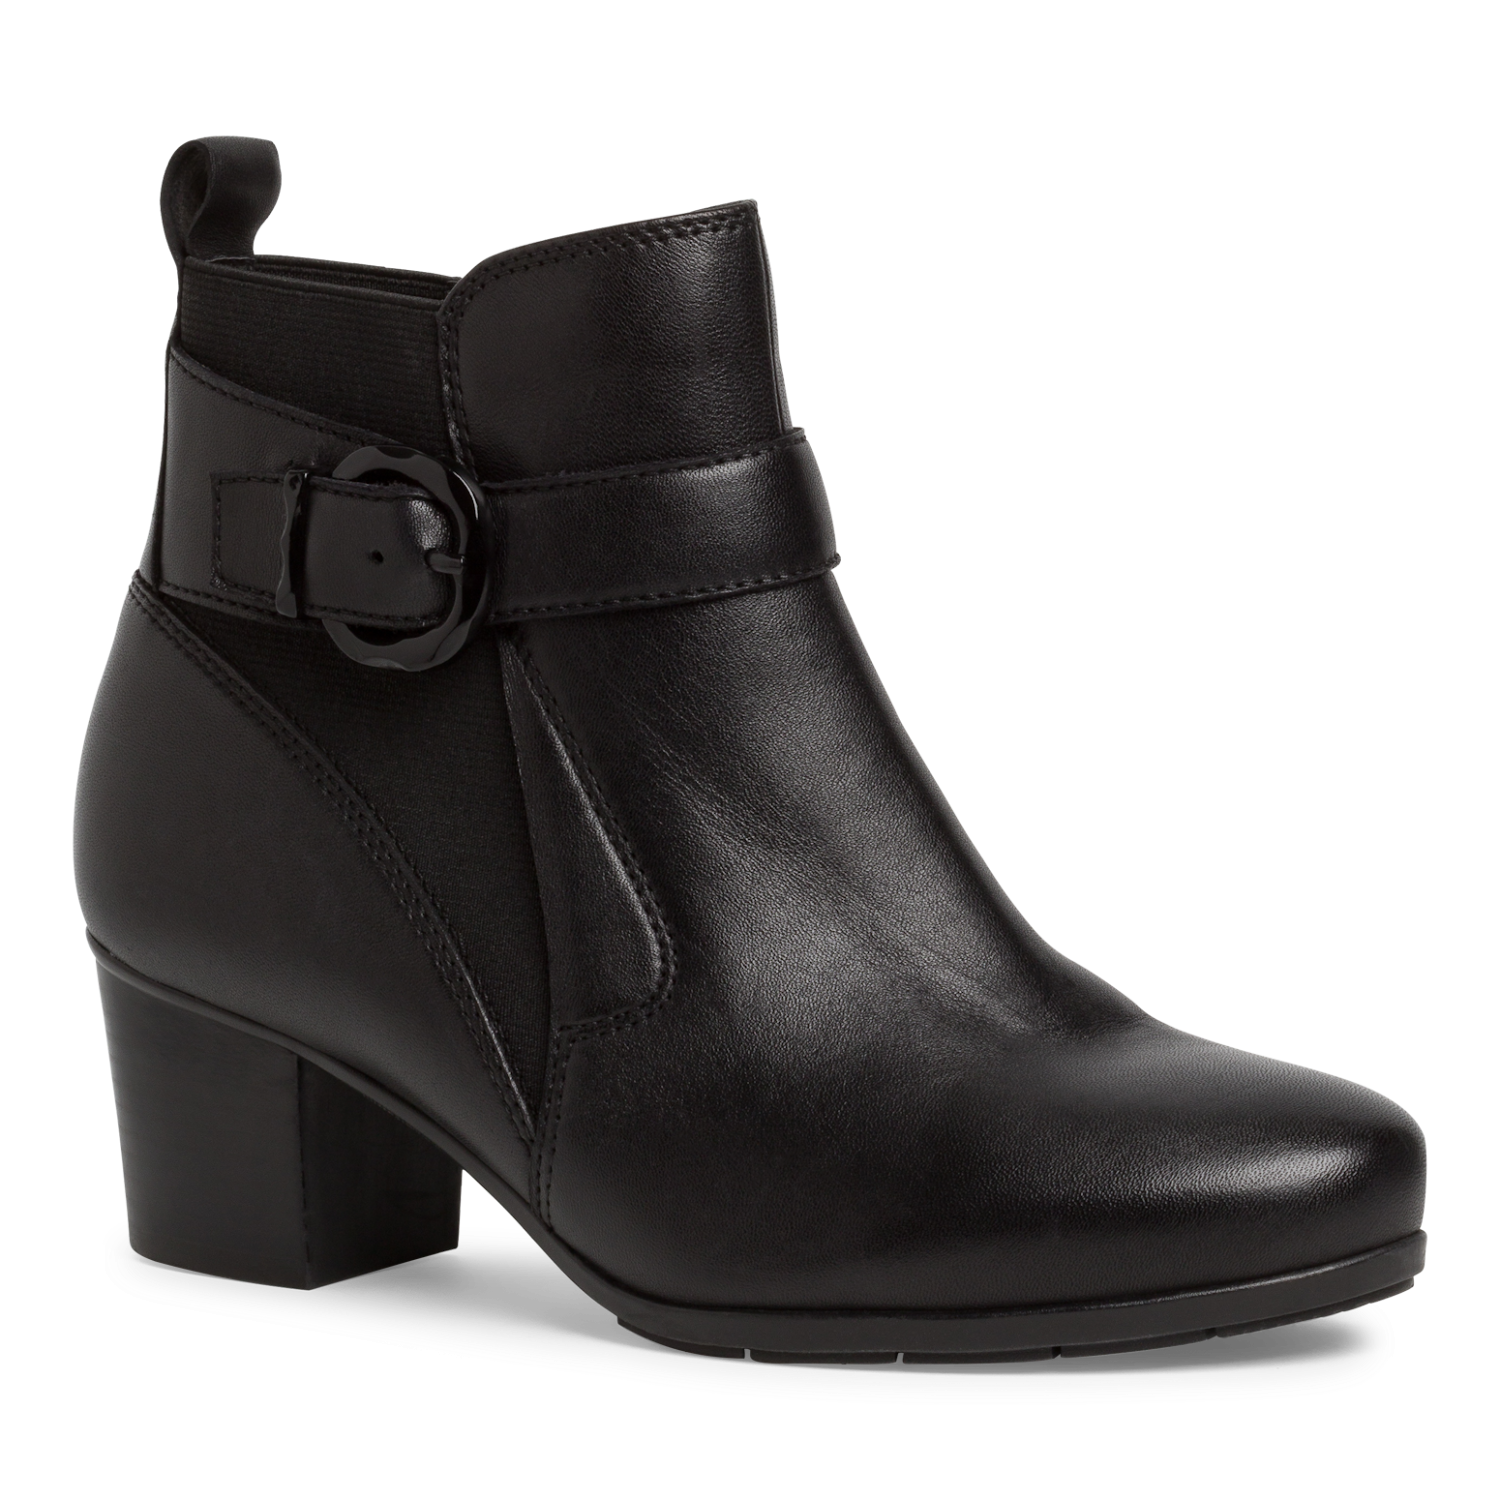 Tamaris8- 85322 - Ladies Ankle Boot in Black | Tamaris | Wisemans | Bantry | Shoe Shop | West Cork | Munster | Ireland